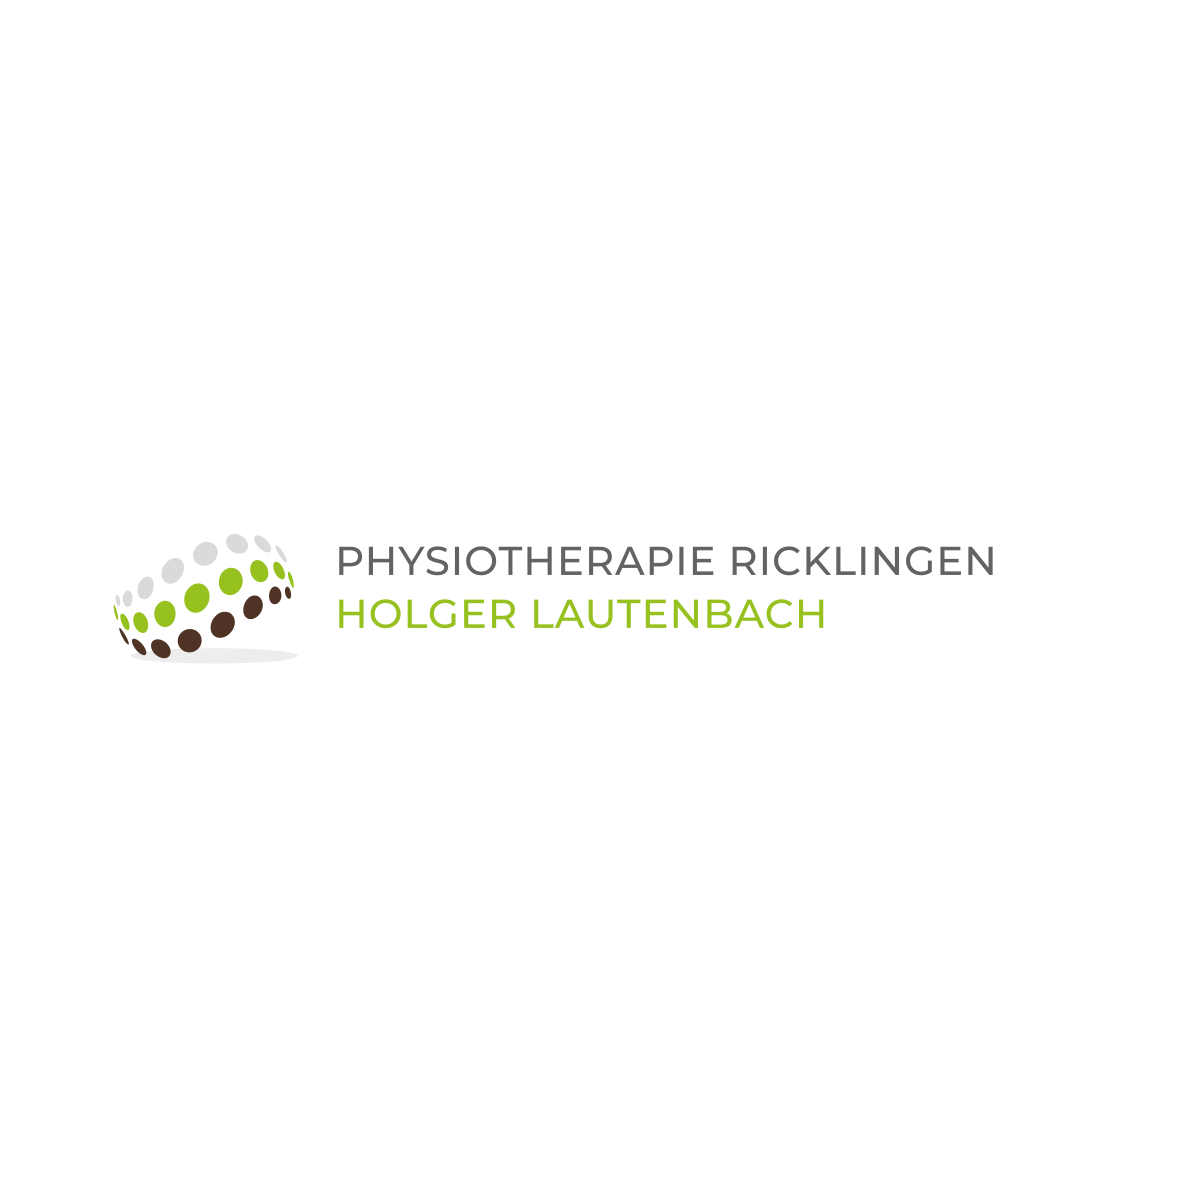 Physiotherapie Ricklingen Holger Lautenbach Logo